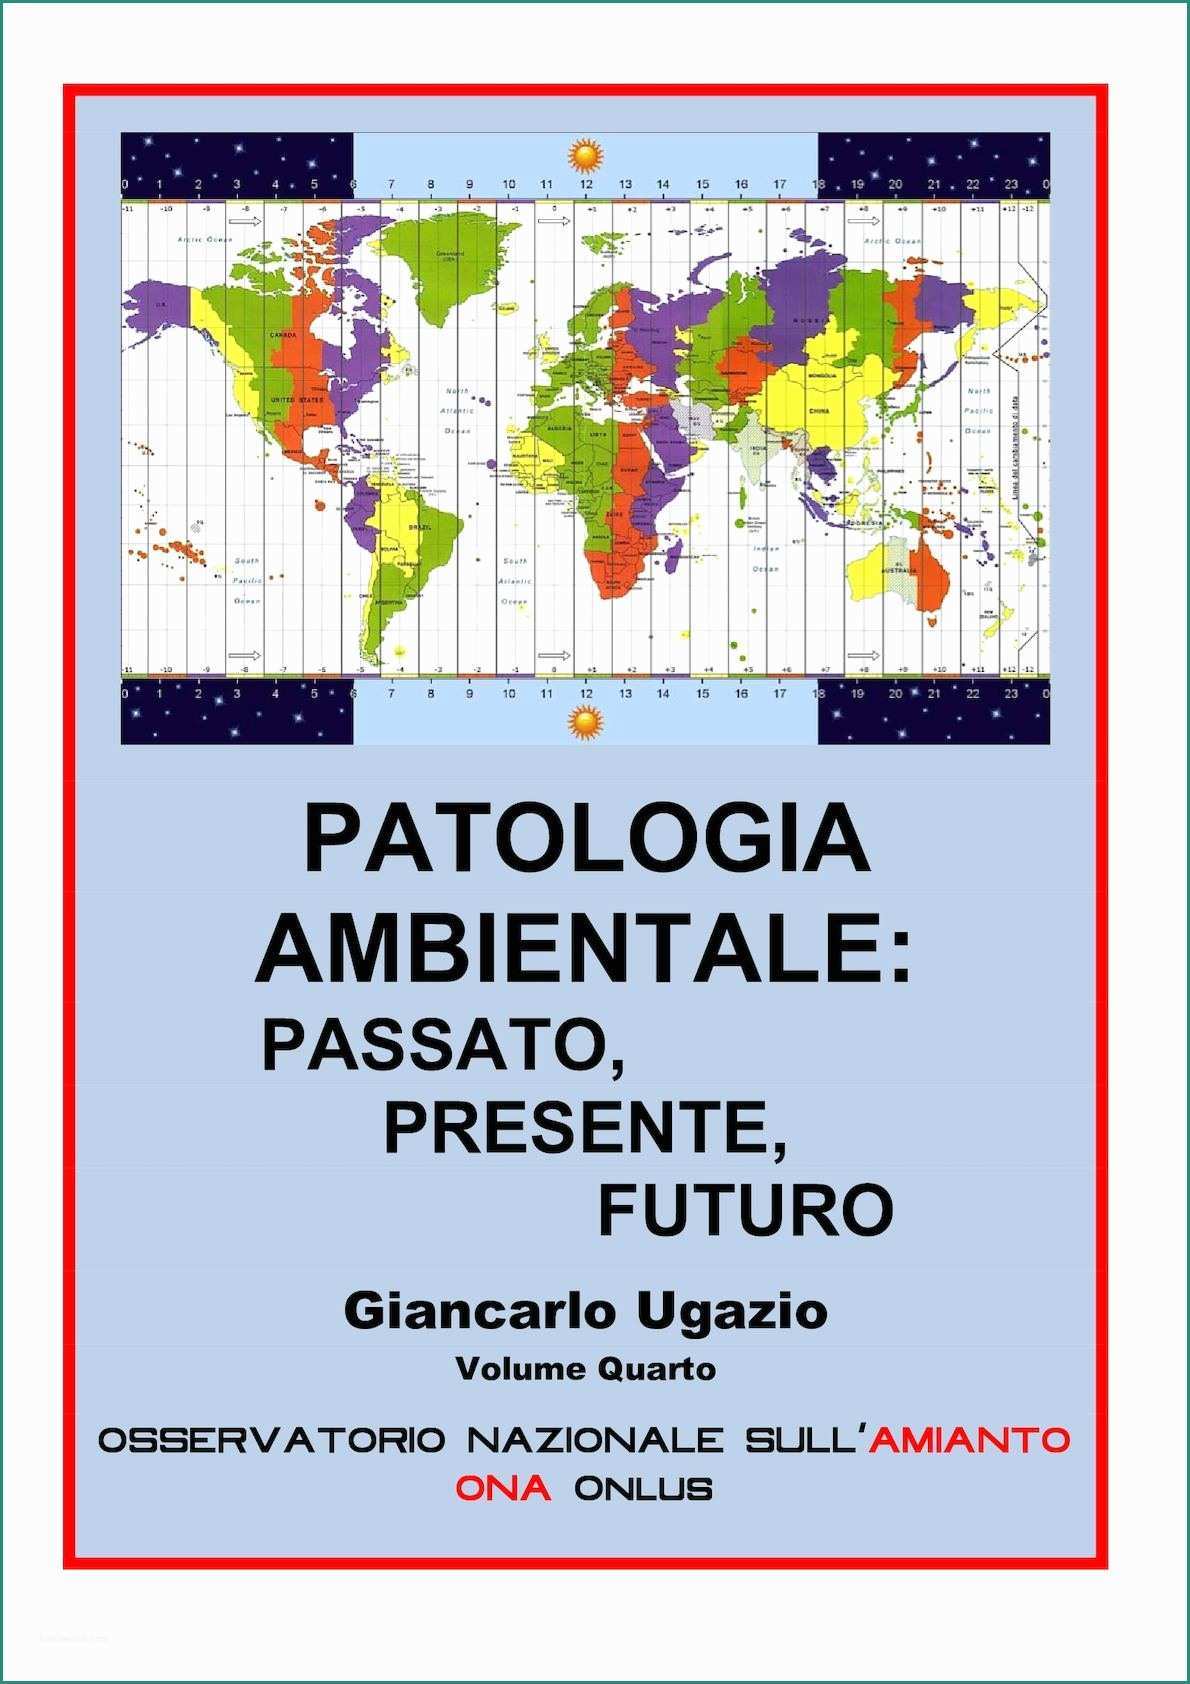 Linear Apparecchi Acustici E Calaméo Ugazio Patologia Ambientale Vol Iv